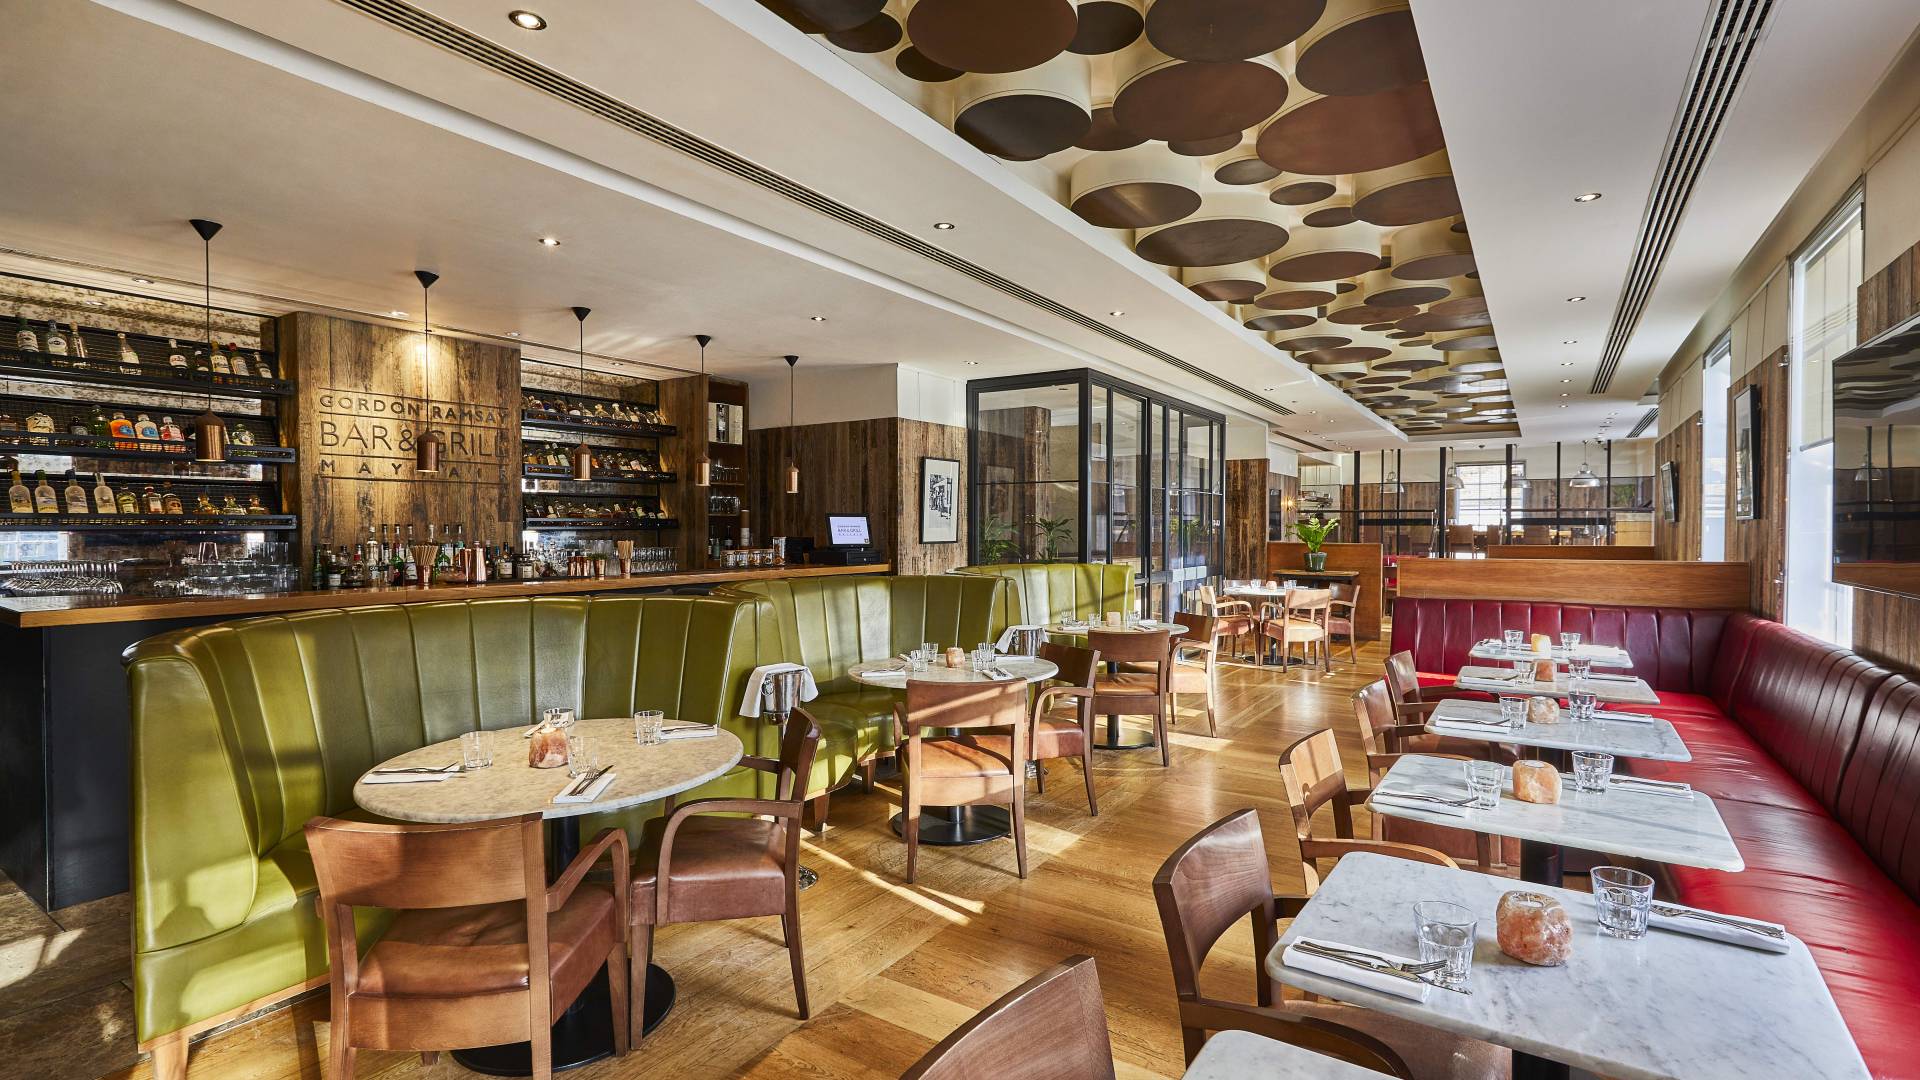 Images Gordon Ramsay Bar & Grill - Mayfair